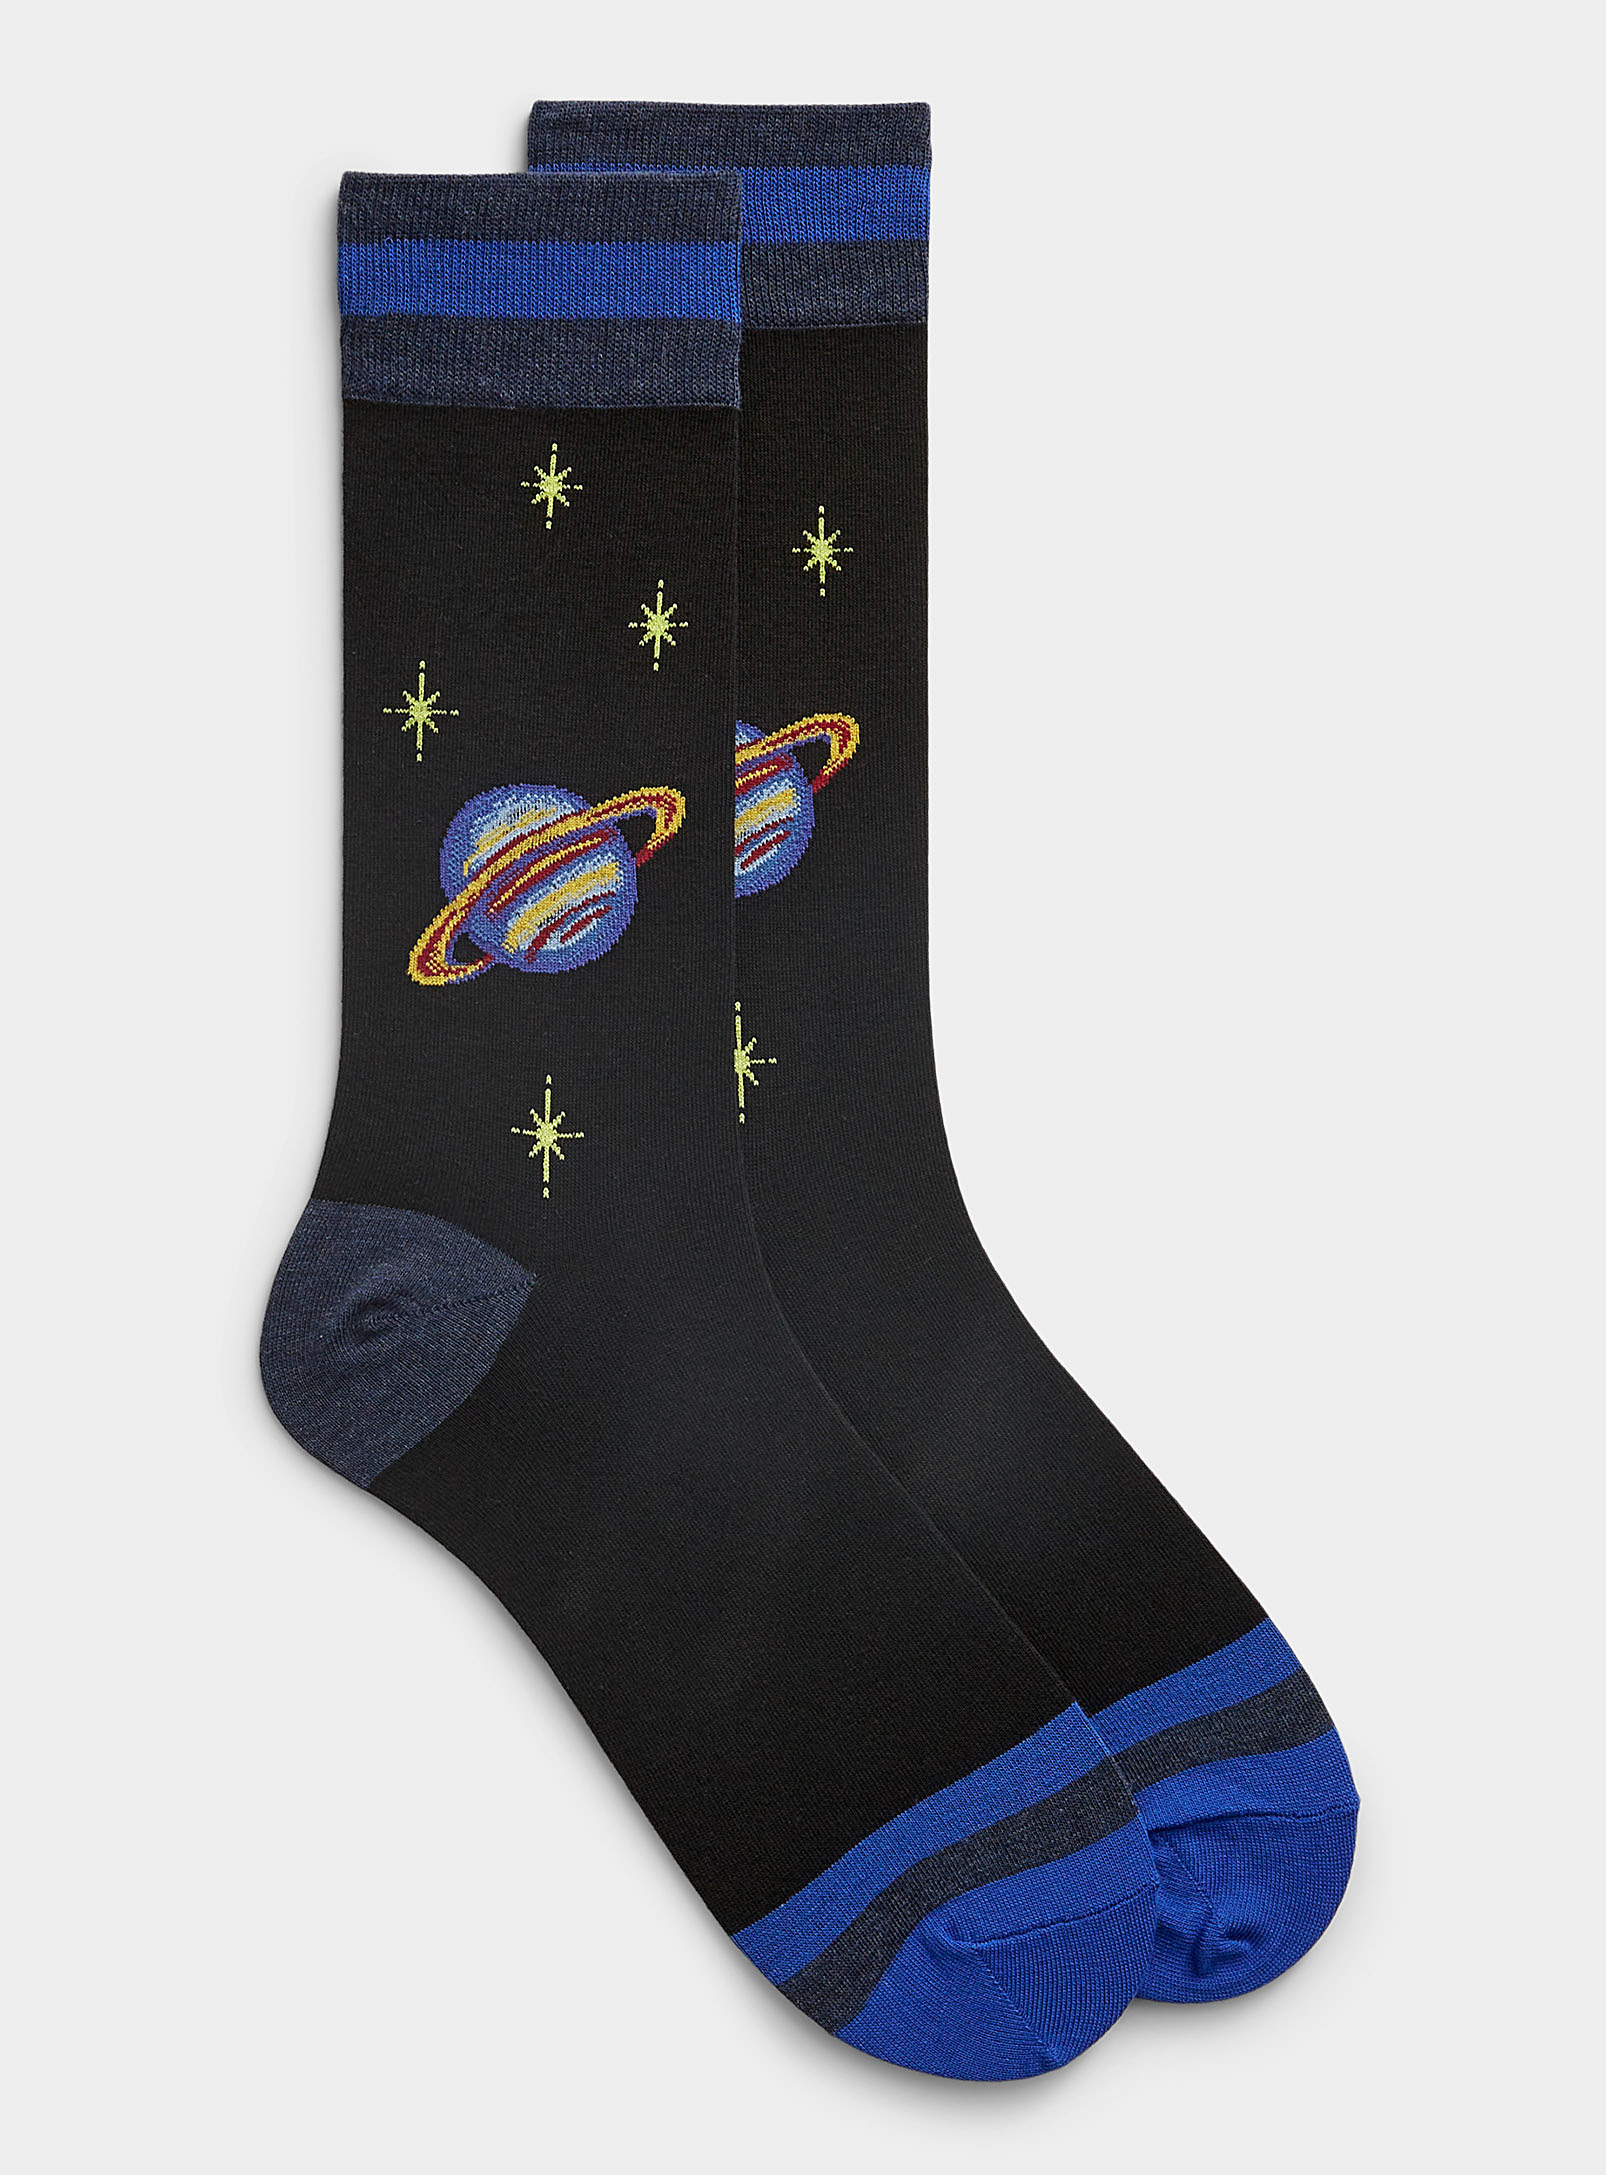 Hot Sox Planet Saturn Sock In Black